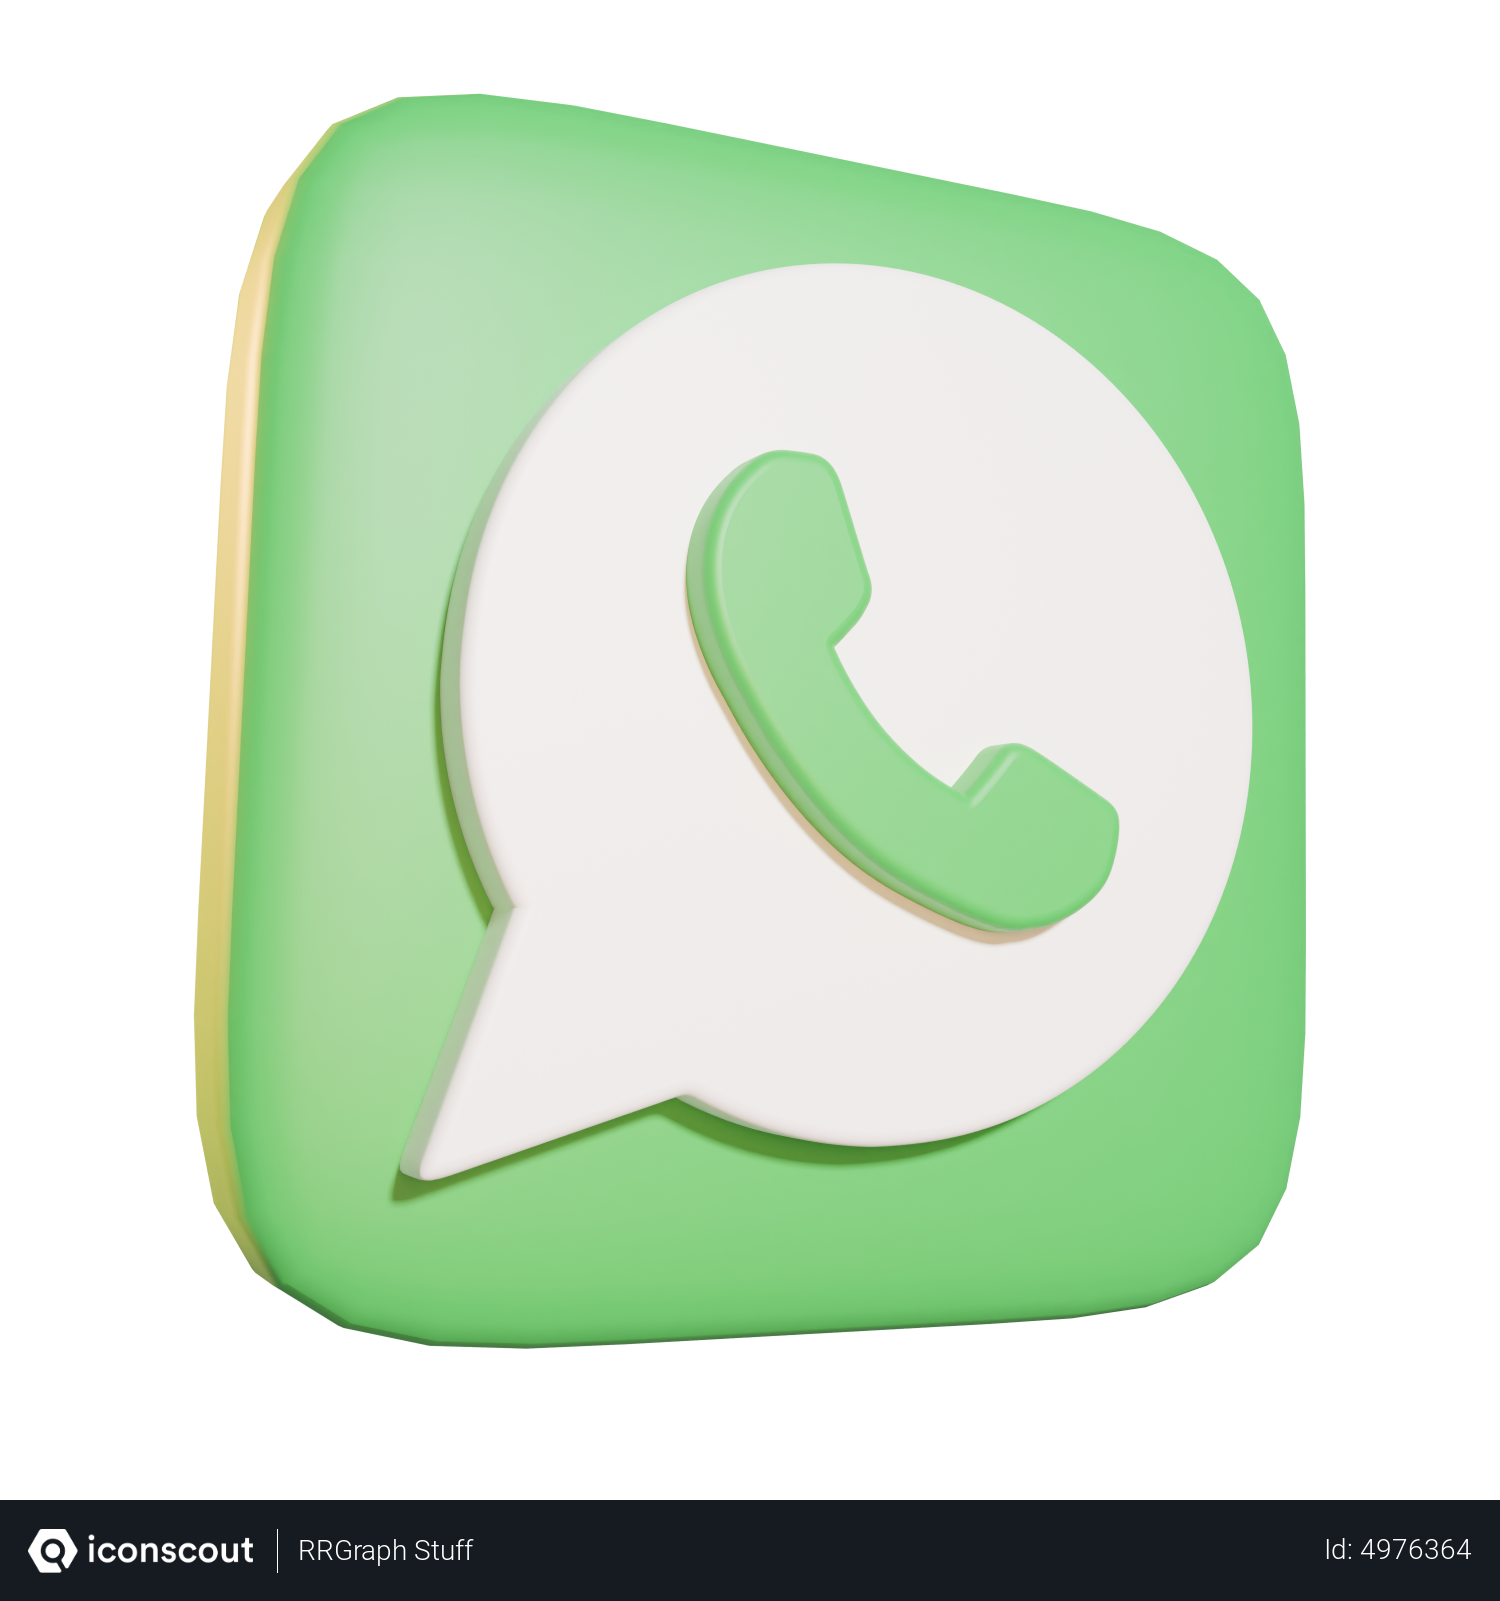 Details 69+ phone and whatsapp logo latest